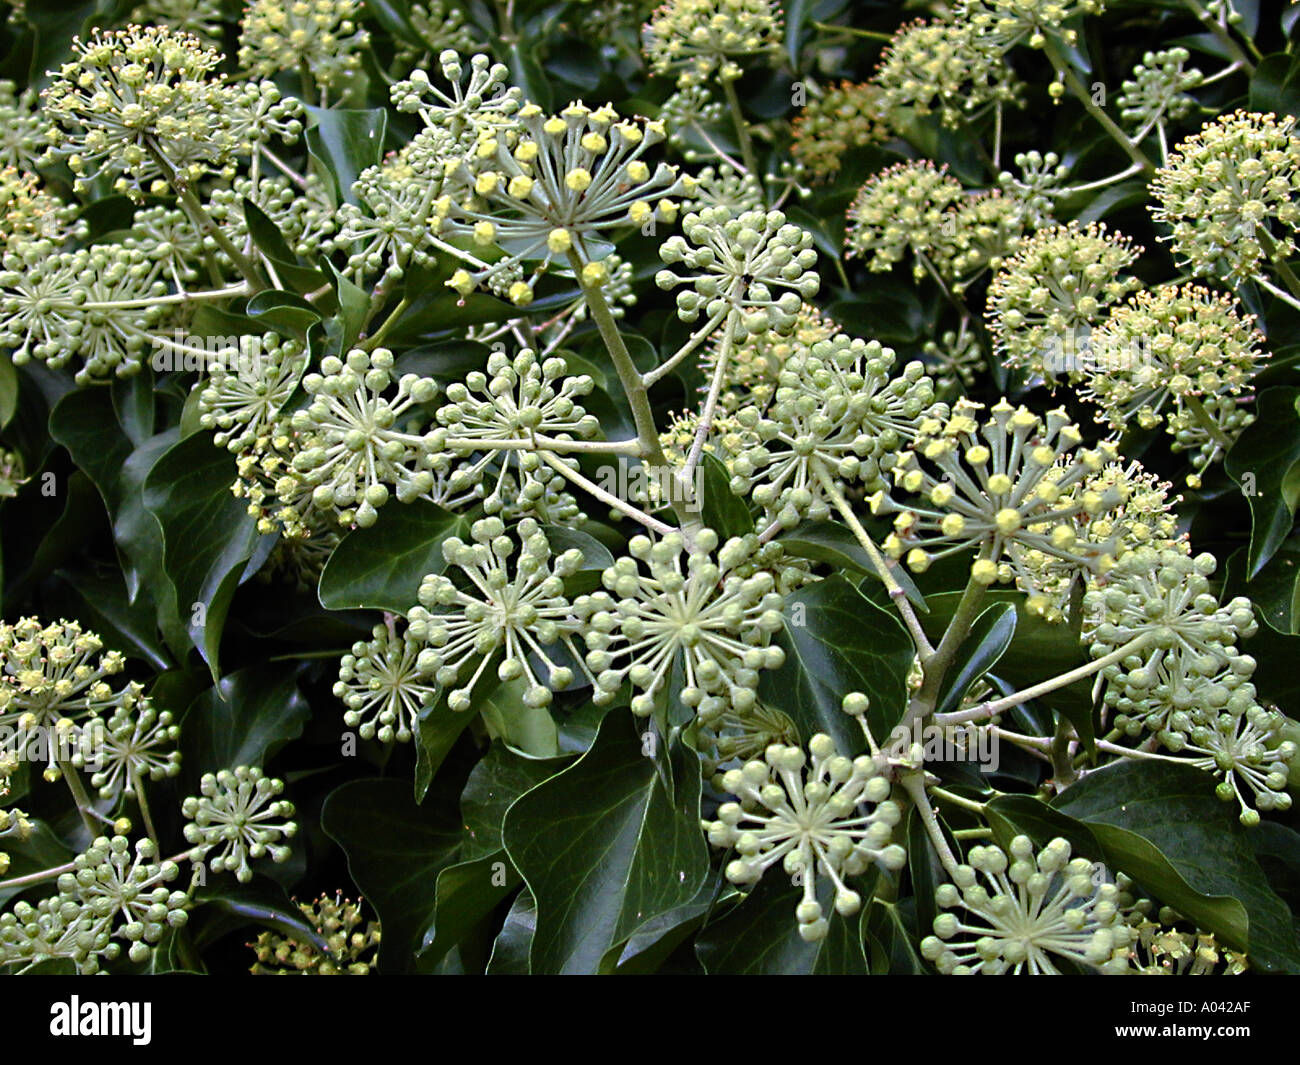 English ivy identification and control: Hedera helix - King County,  Washington